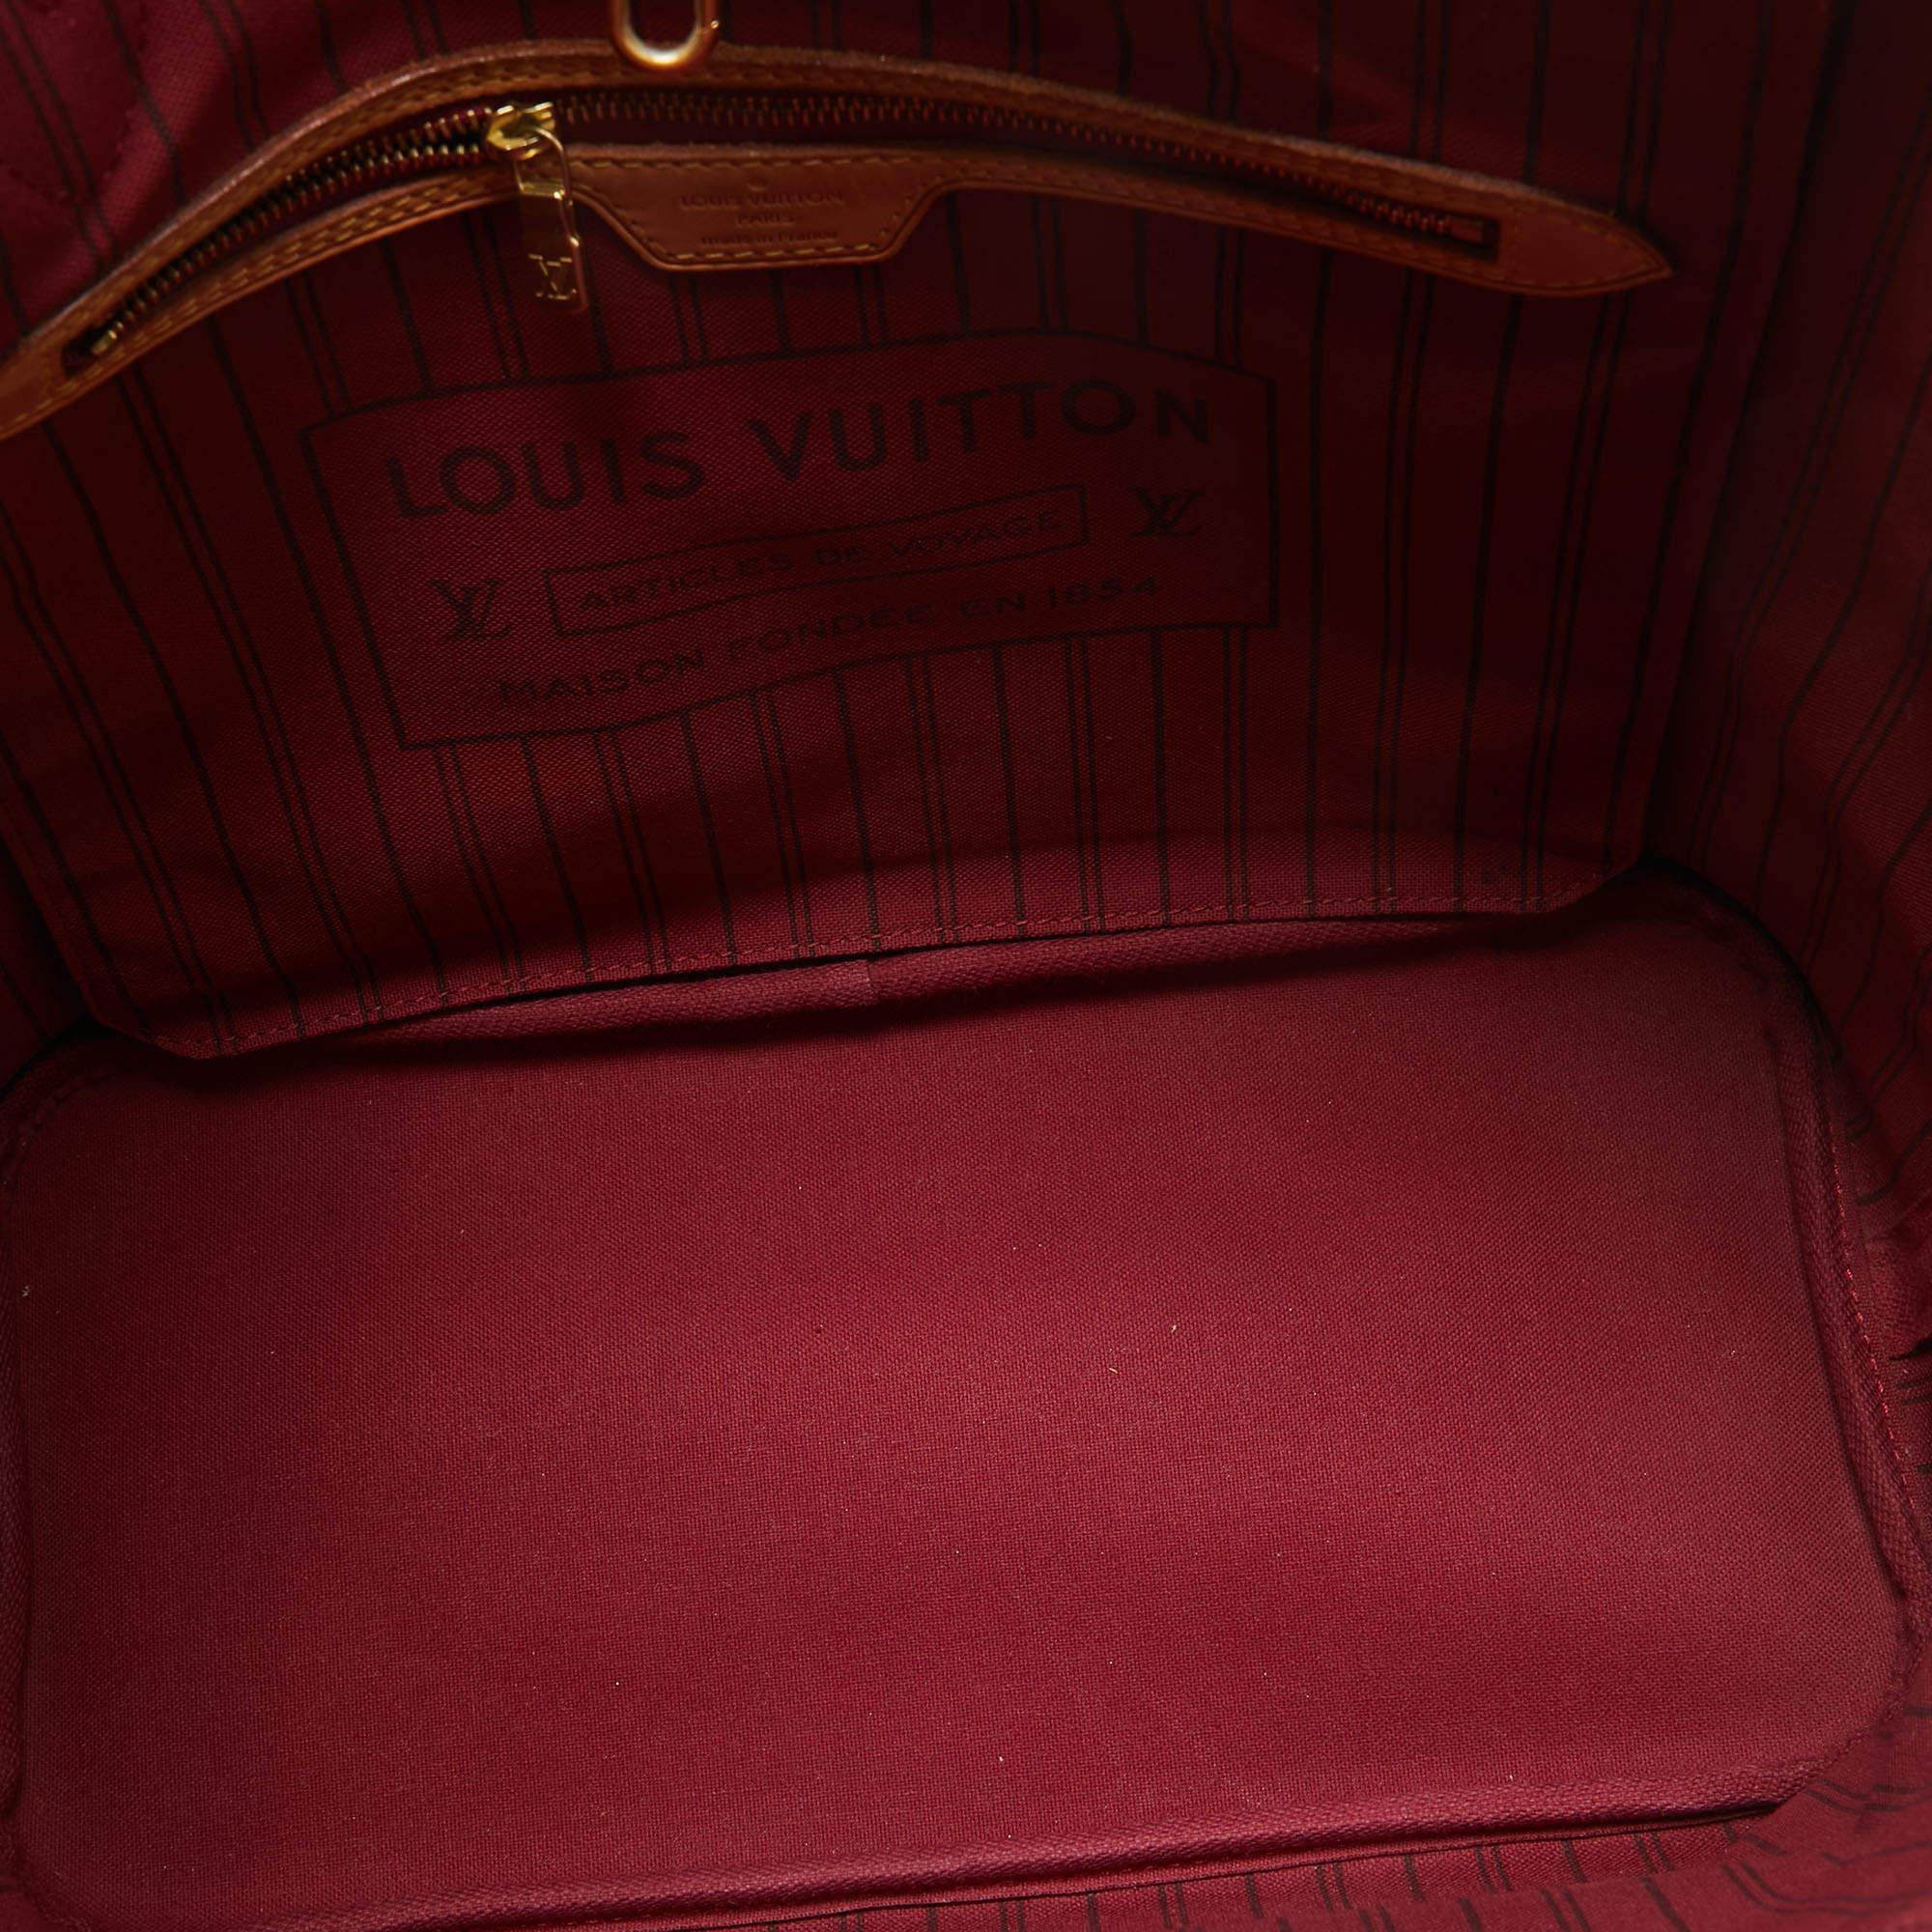 Louis Vuitton Monogram Canvas Neverfull MM Bag 6